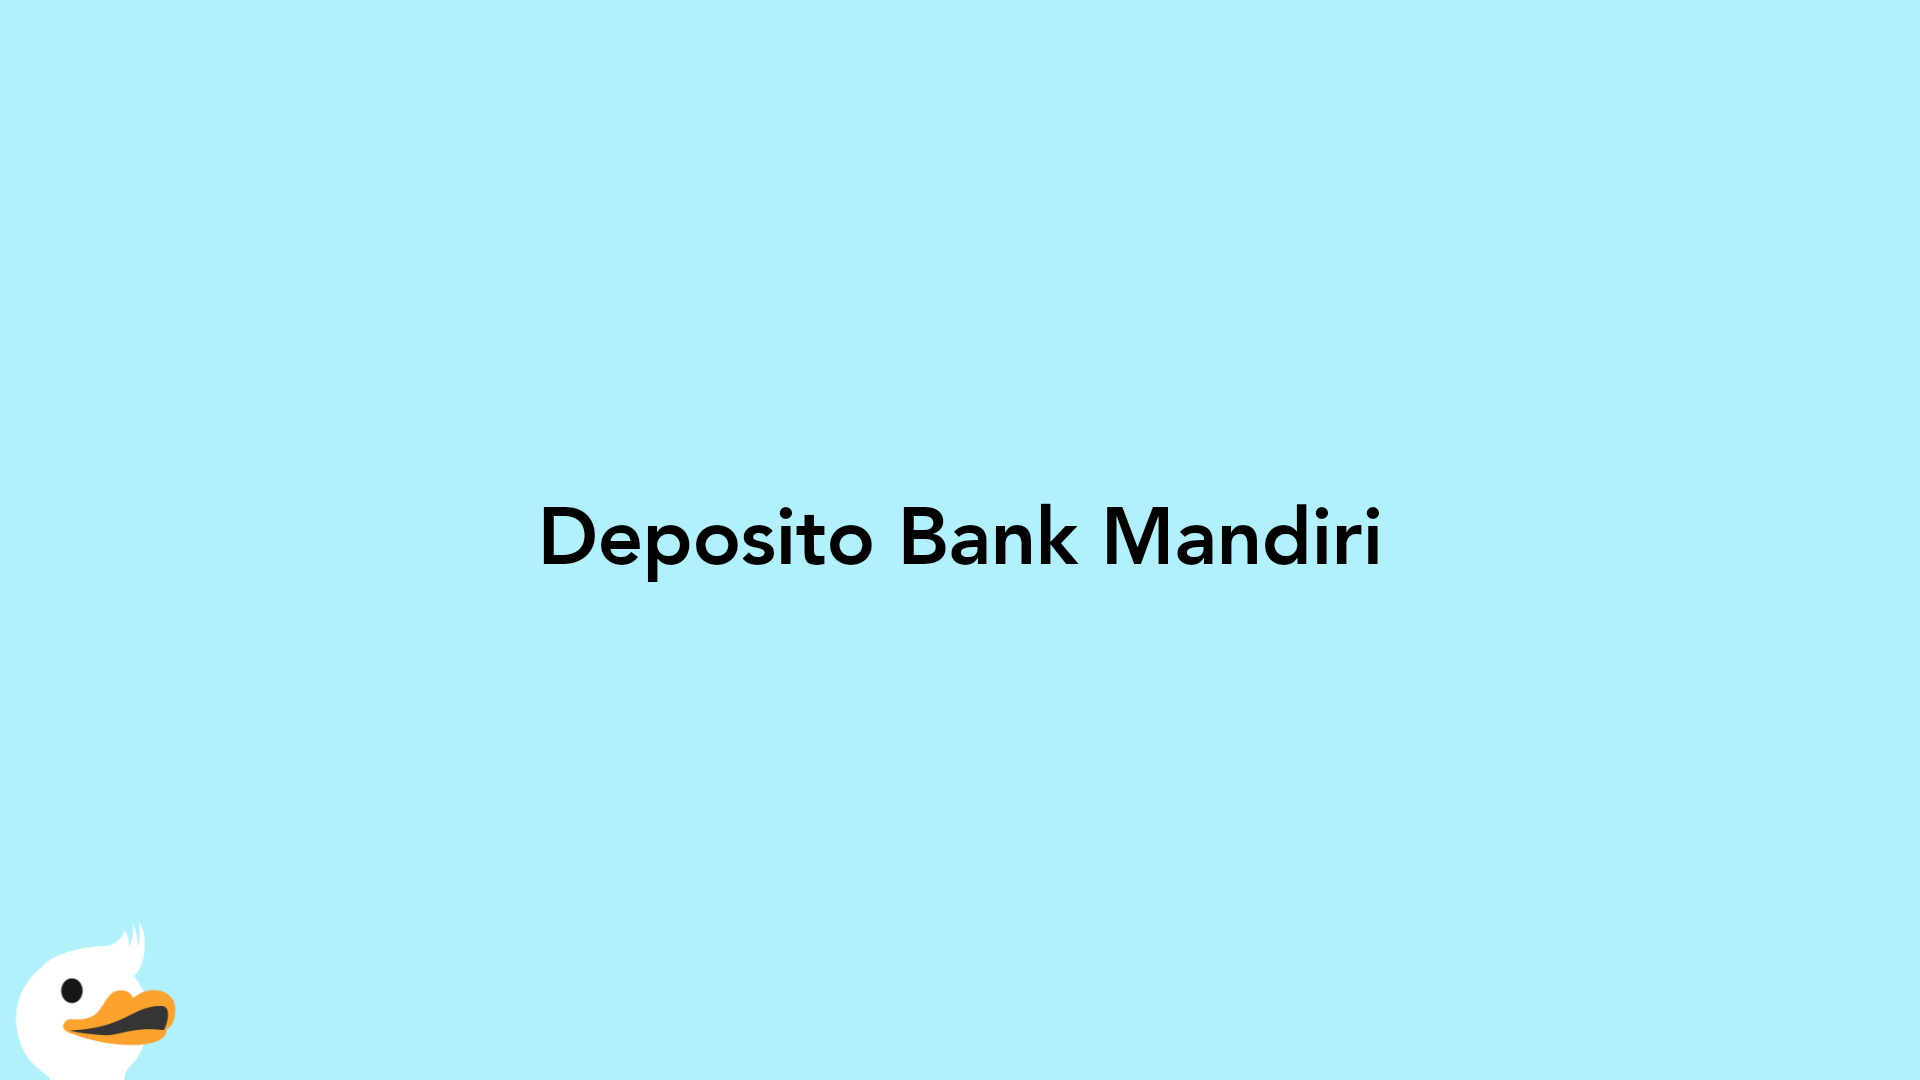 Deposito Bank Mandiri